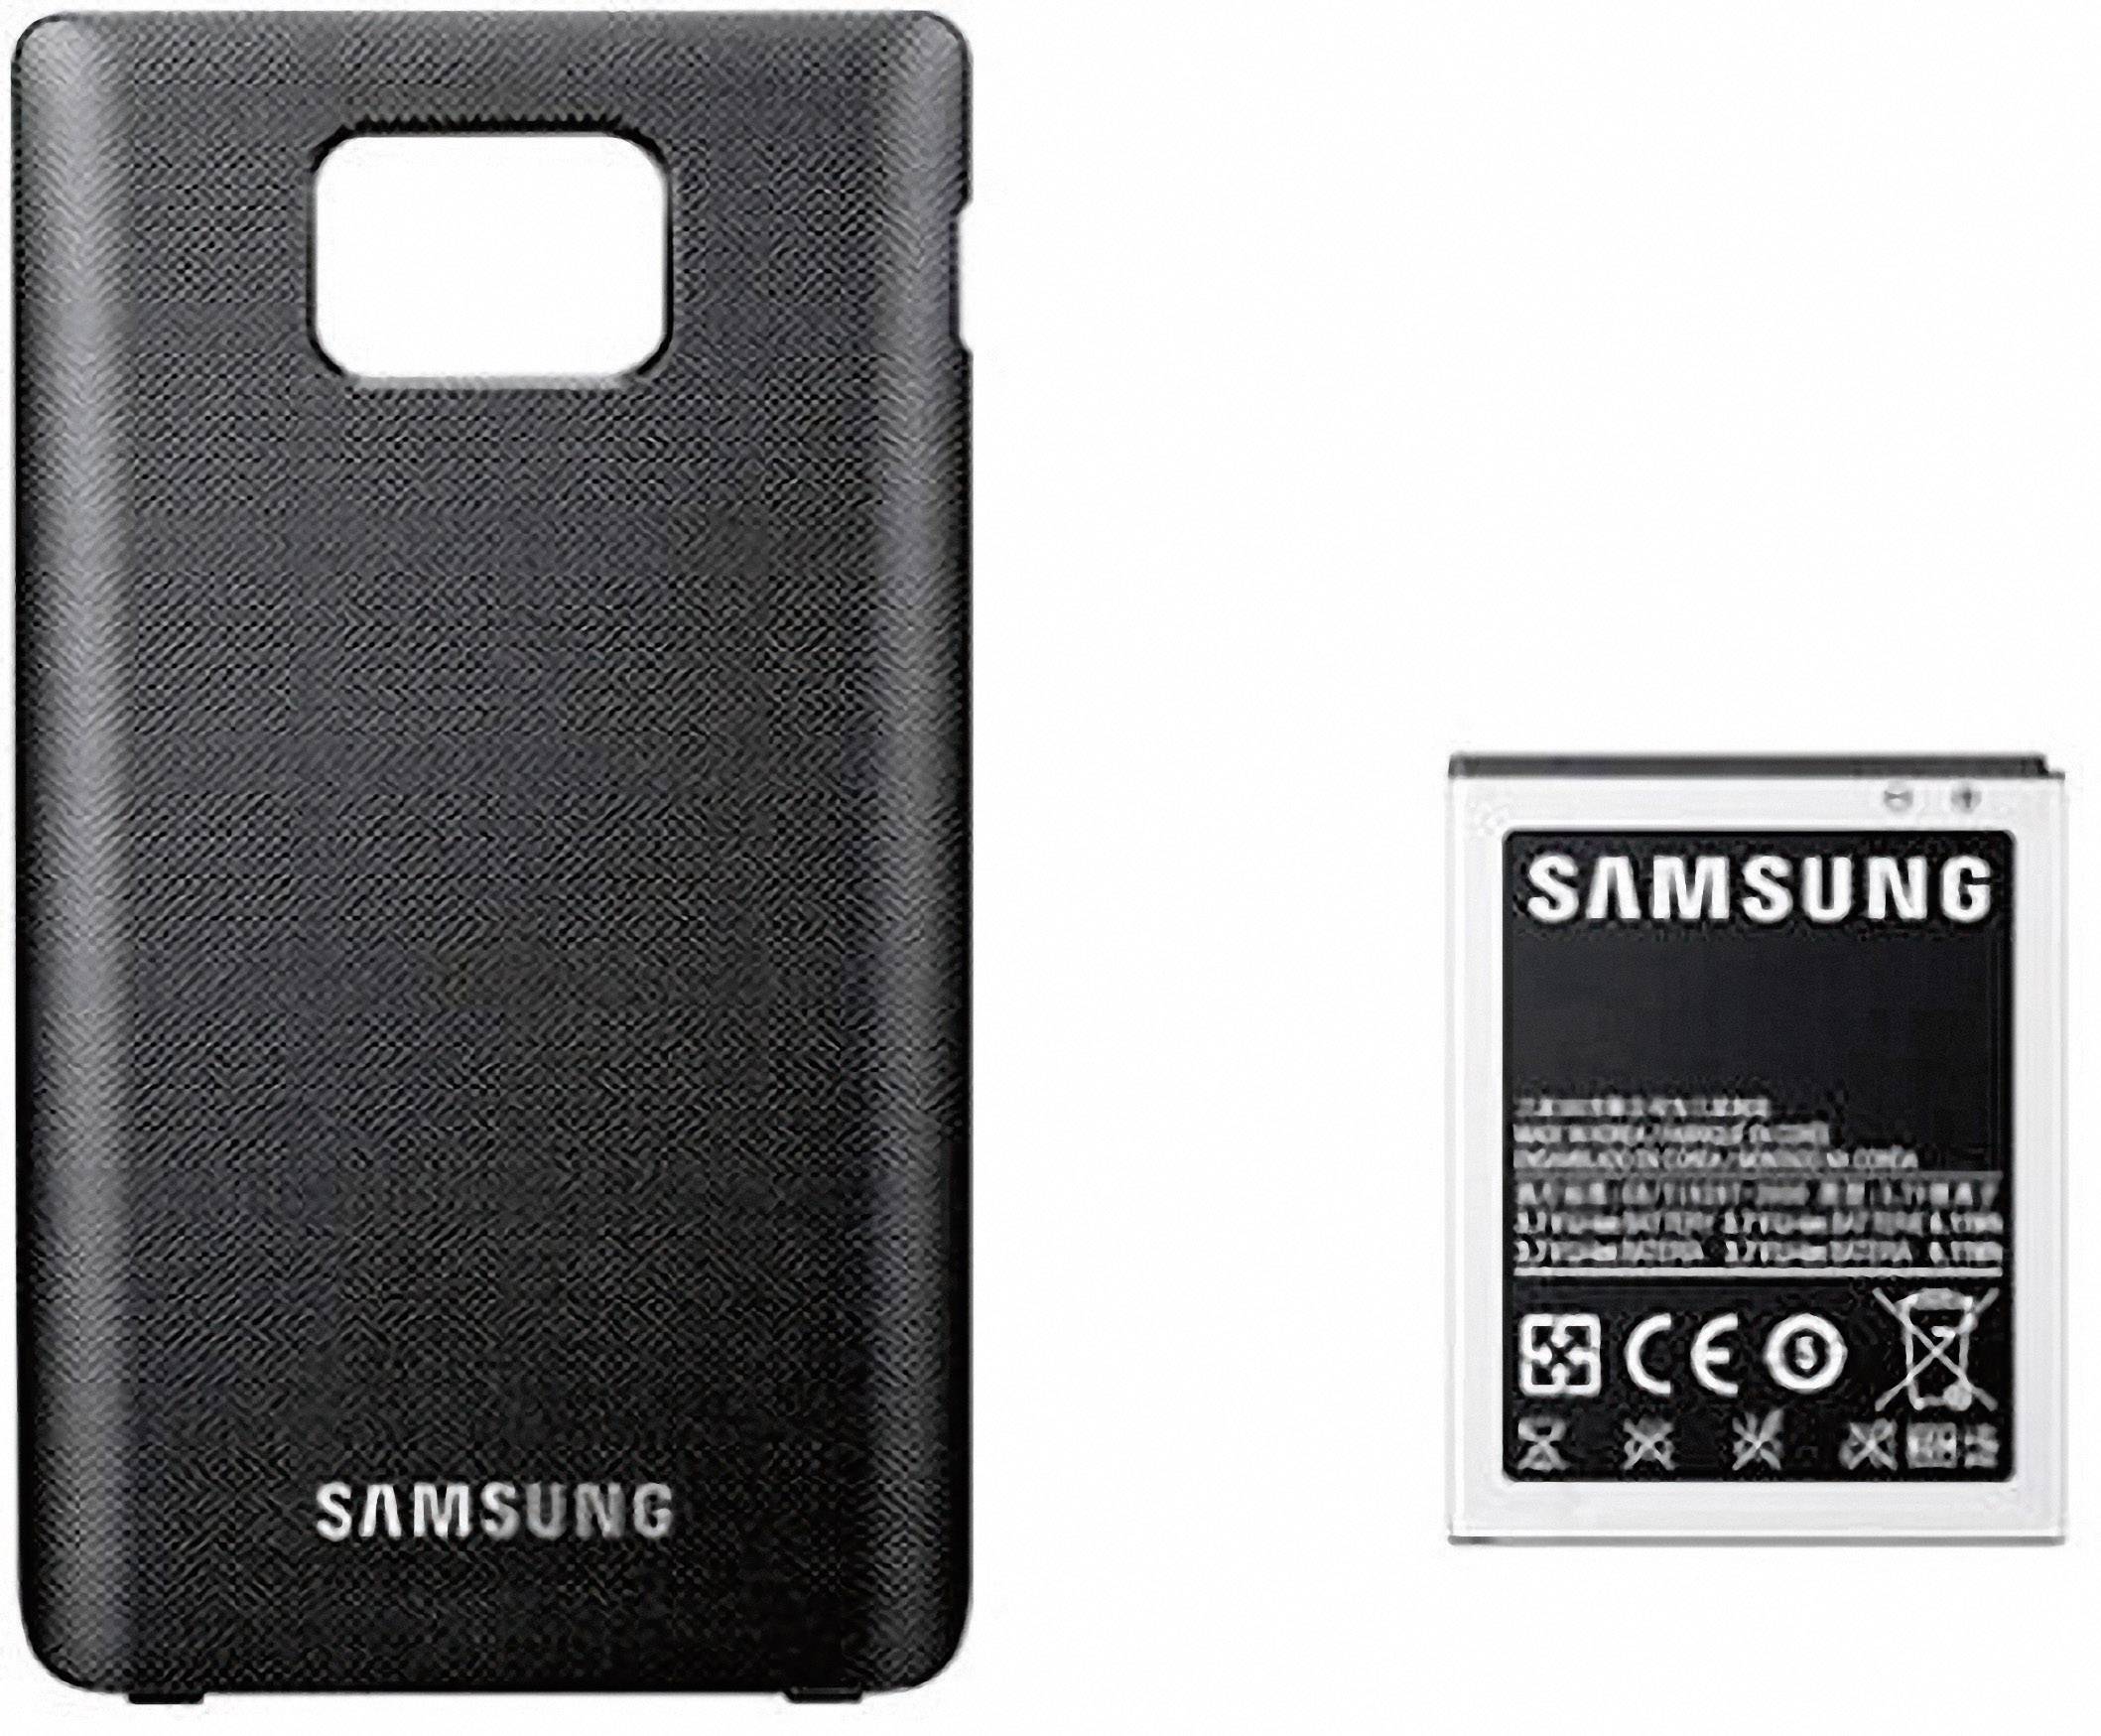 Samsung Galaxy s II gt-i9100. Коннектор батарея Samsung 9100. Galaxy s2 i9100 2023. Самсунг Cover Battery Pack. Аккумулятор galaxy a3